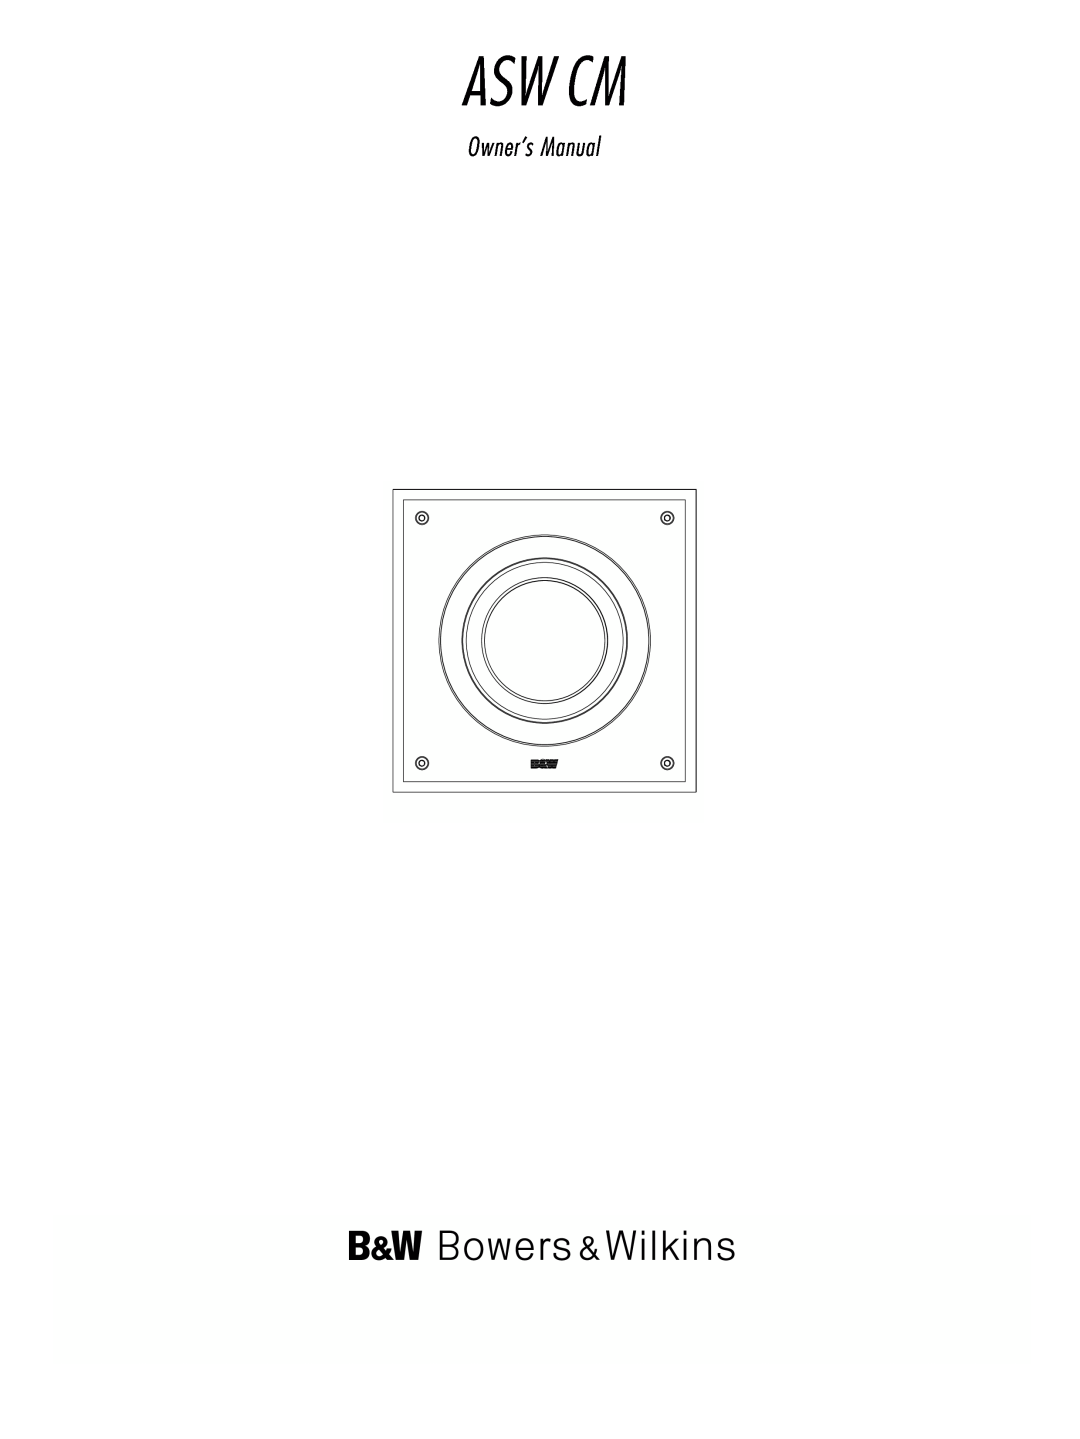 Bowers & Wilkins ASWCM owner manual Asw Cm, Owner’s Manual 